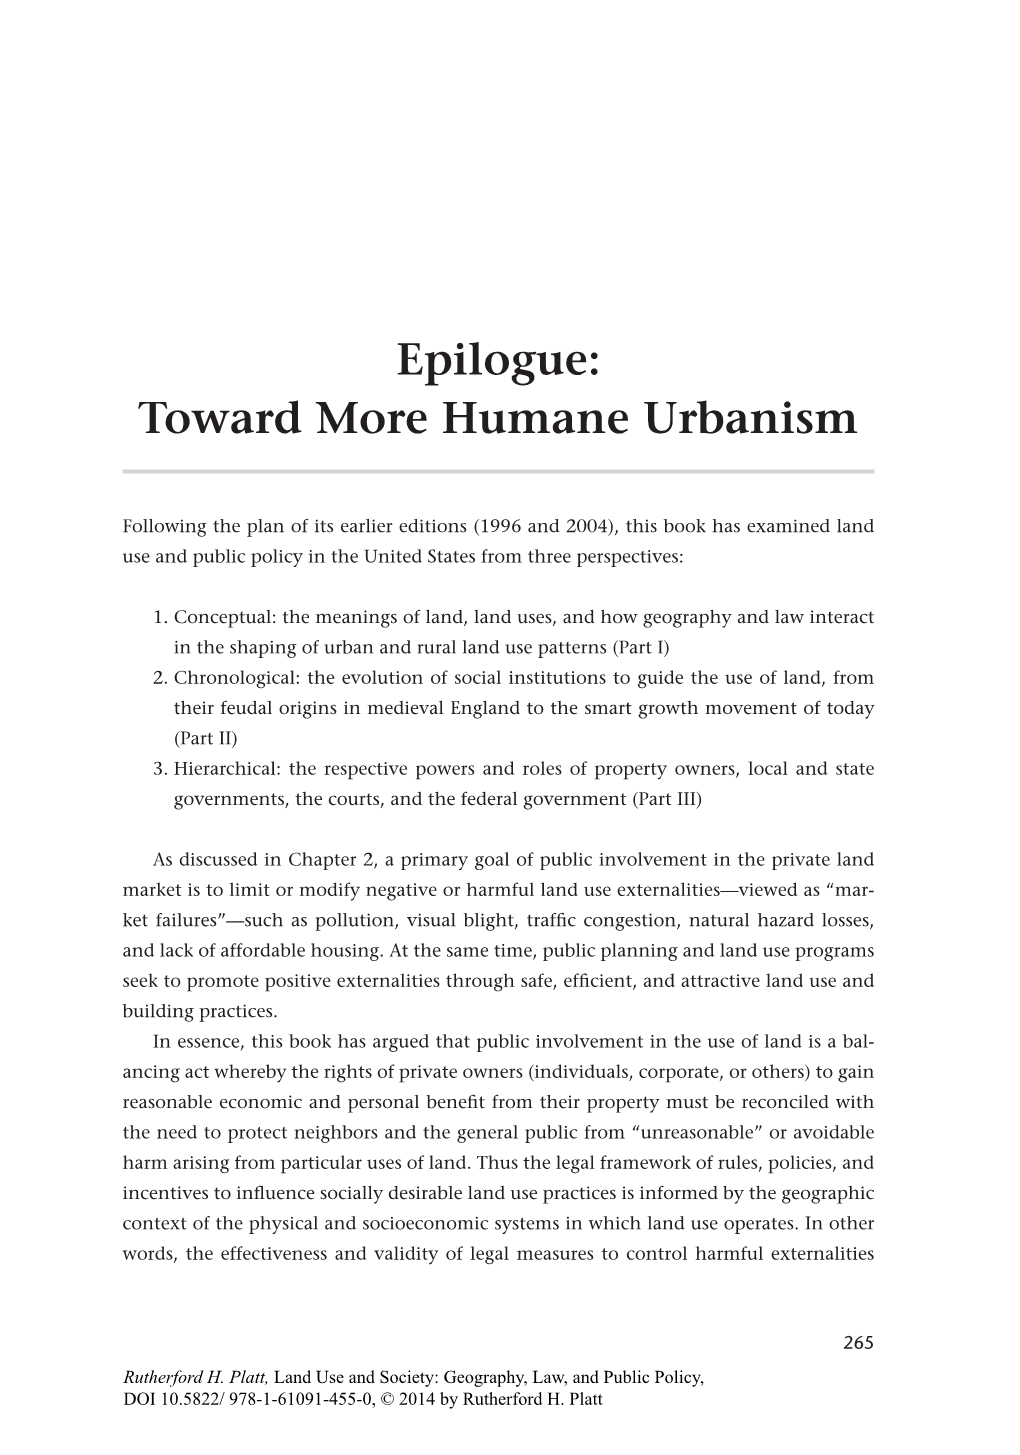 Epilogue: Toward More Humane Urbanism